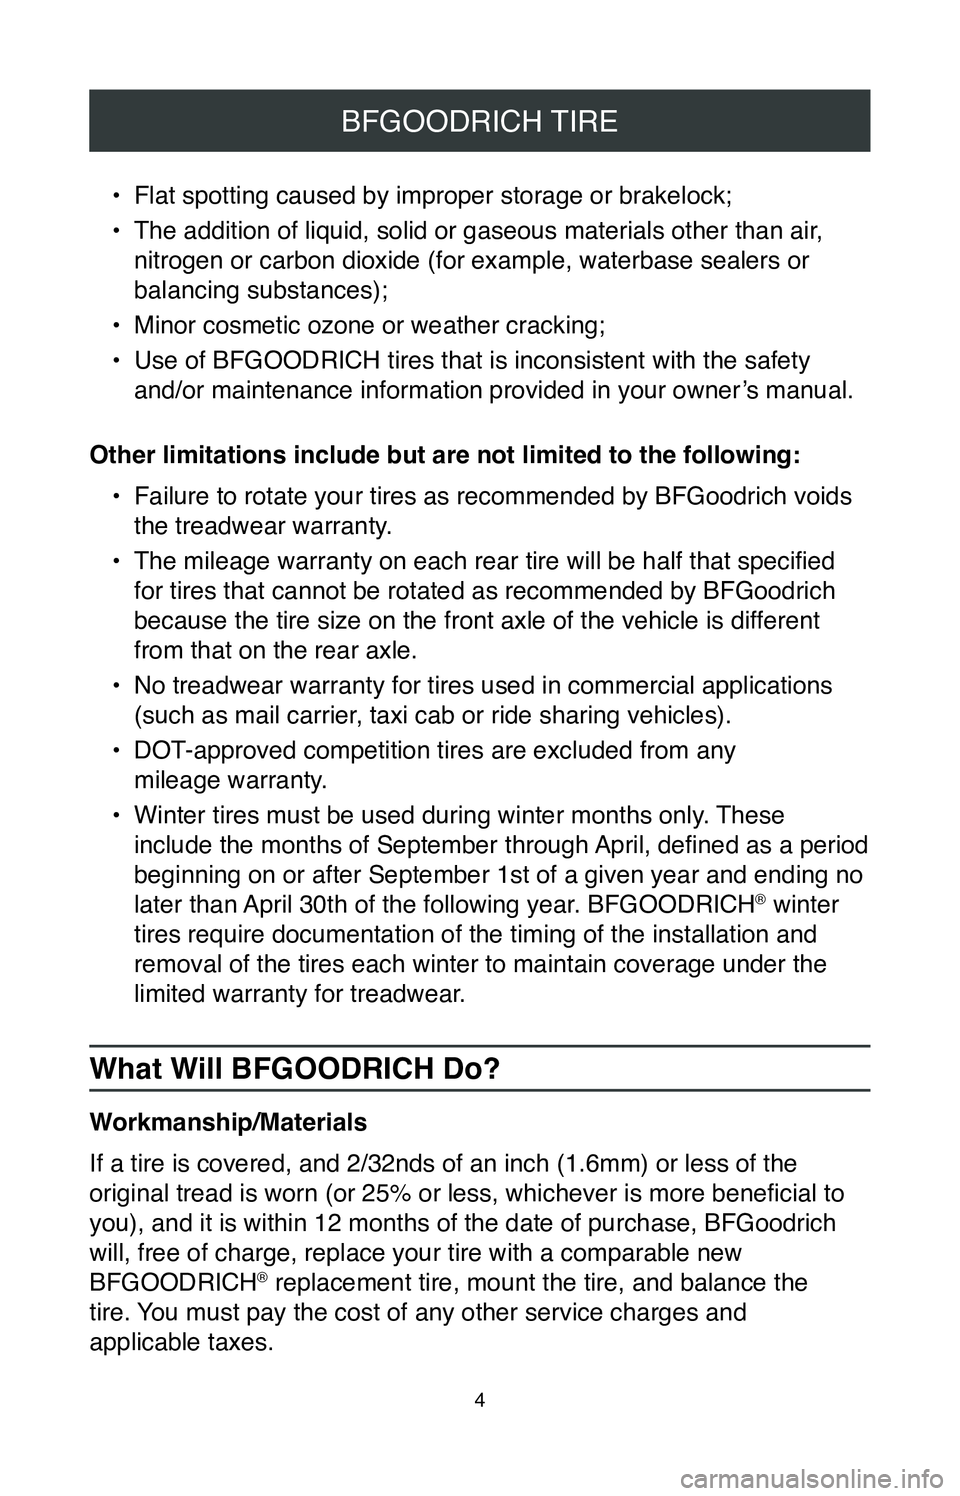 TOYOTA 4RUNNER 2020  Warranties & Maintenance Guides (in English) 4
BFGOODRICH TIRE
